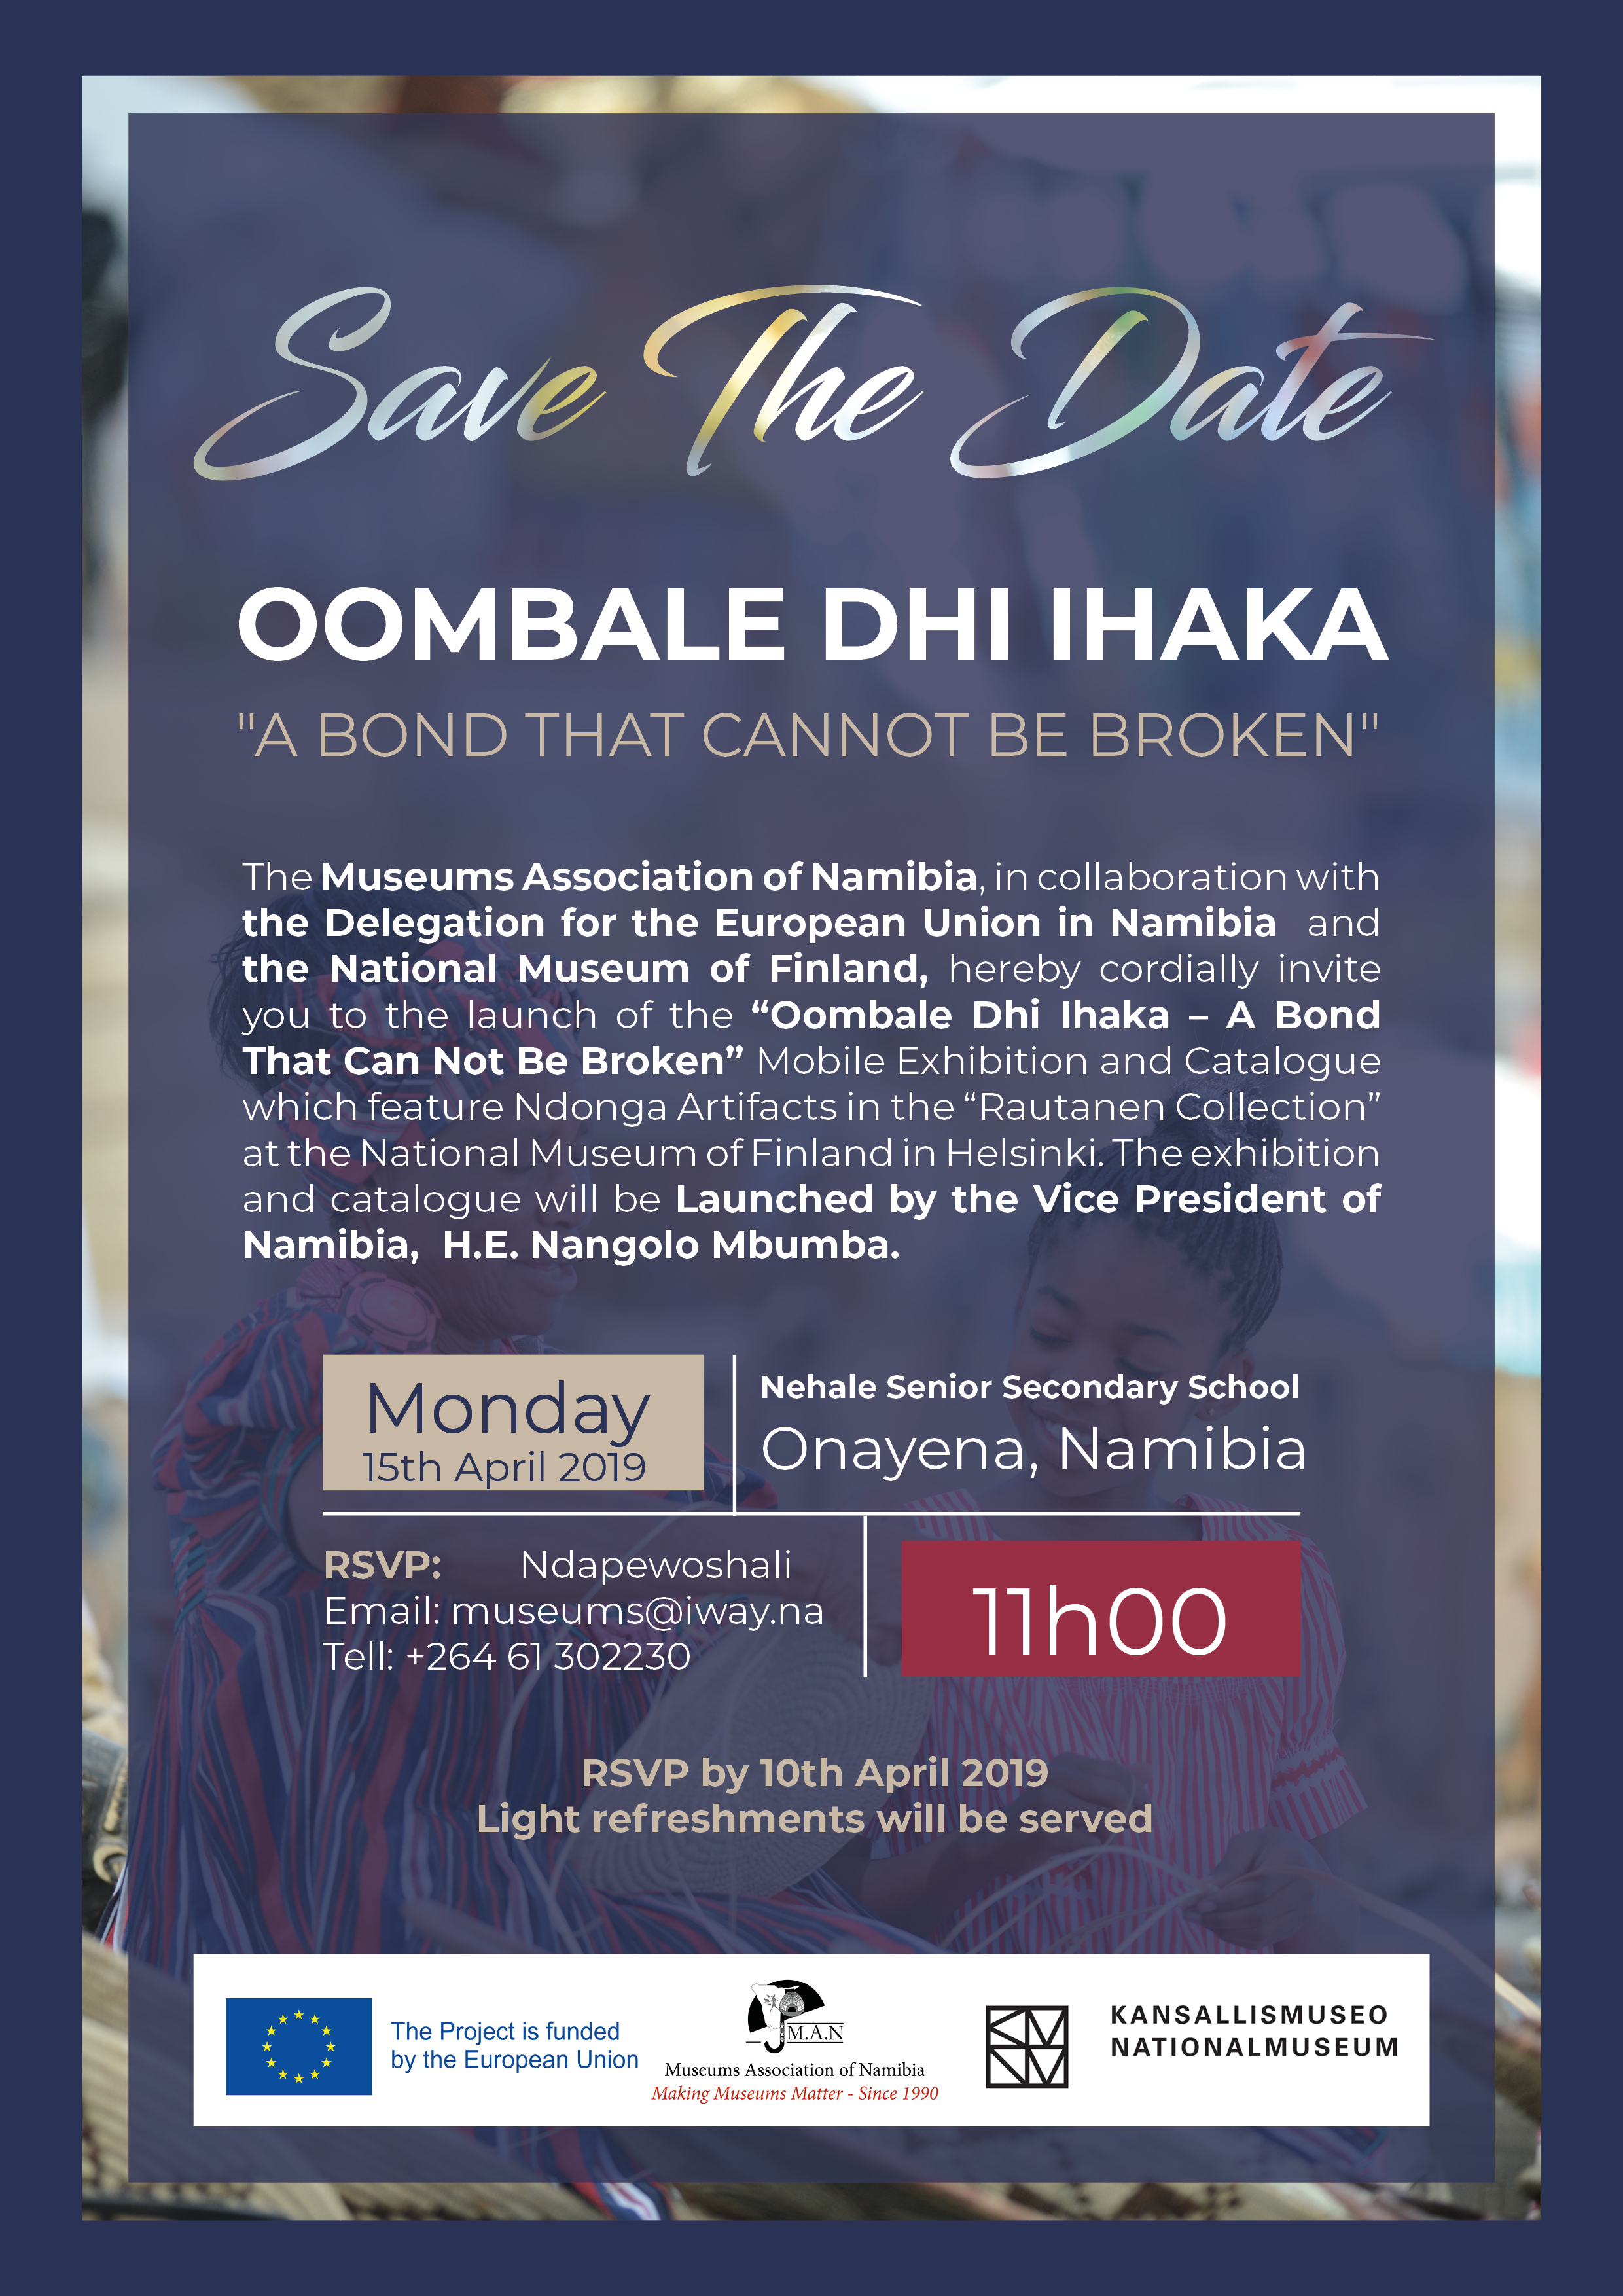 Save The Date Oombale Dhi Ihaka Launch